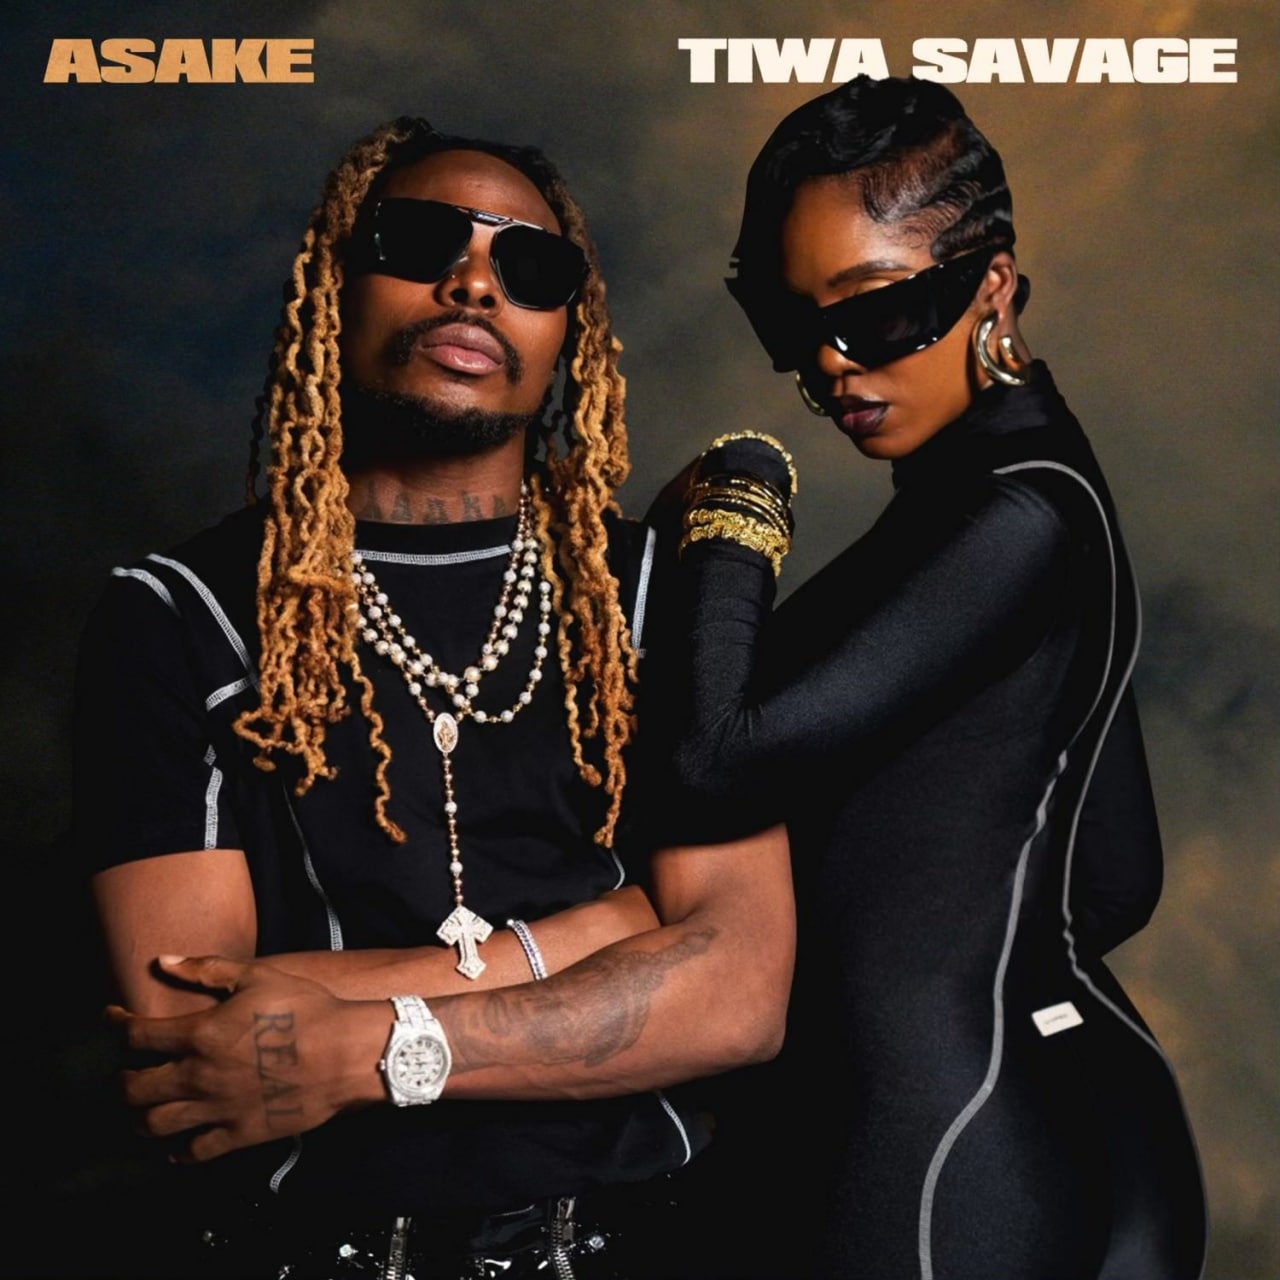 Loaded - Tiwa Savage feat. Asake